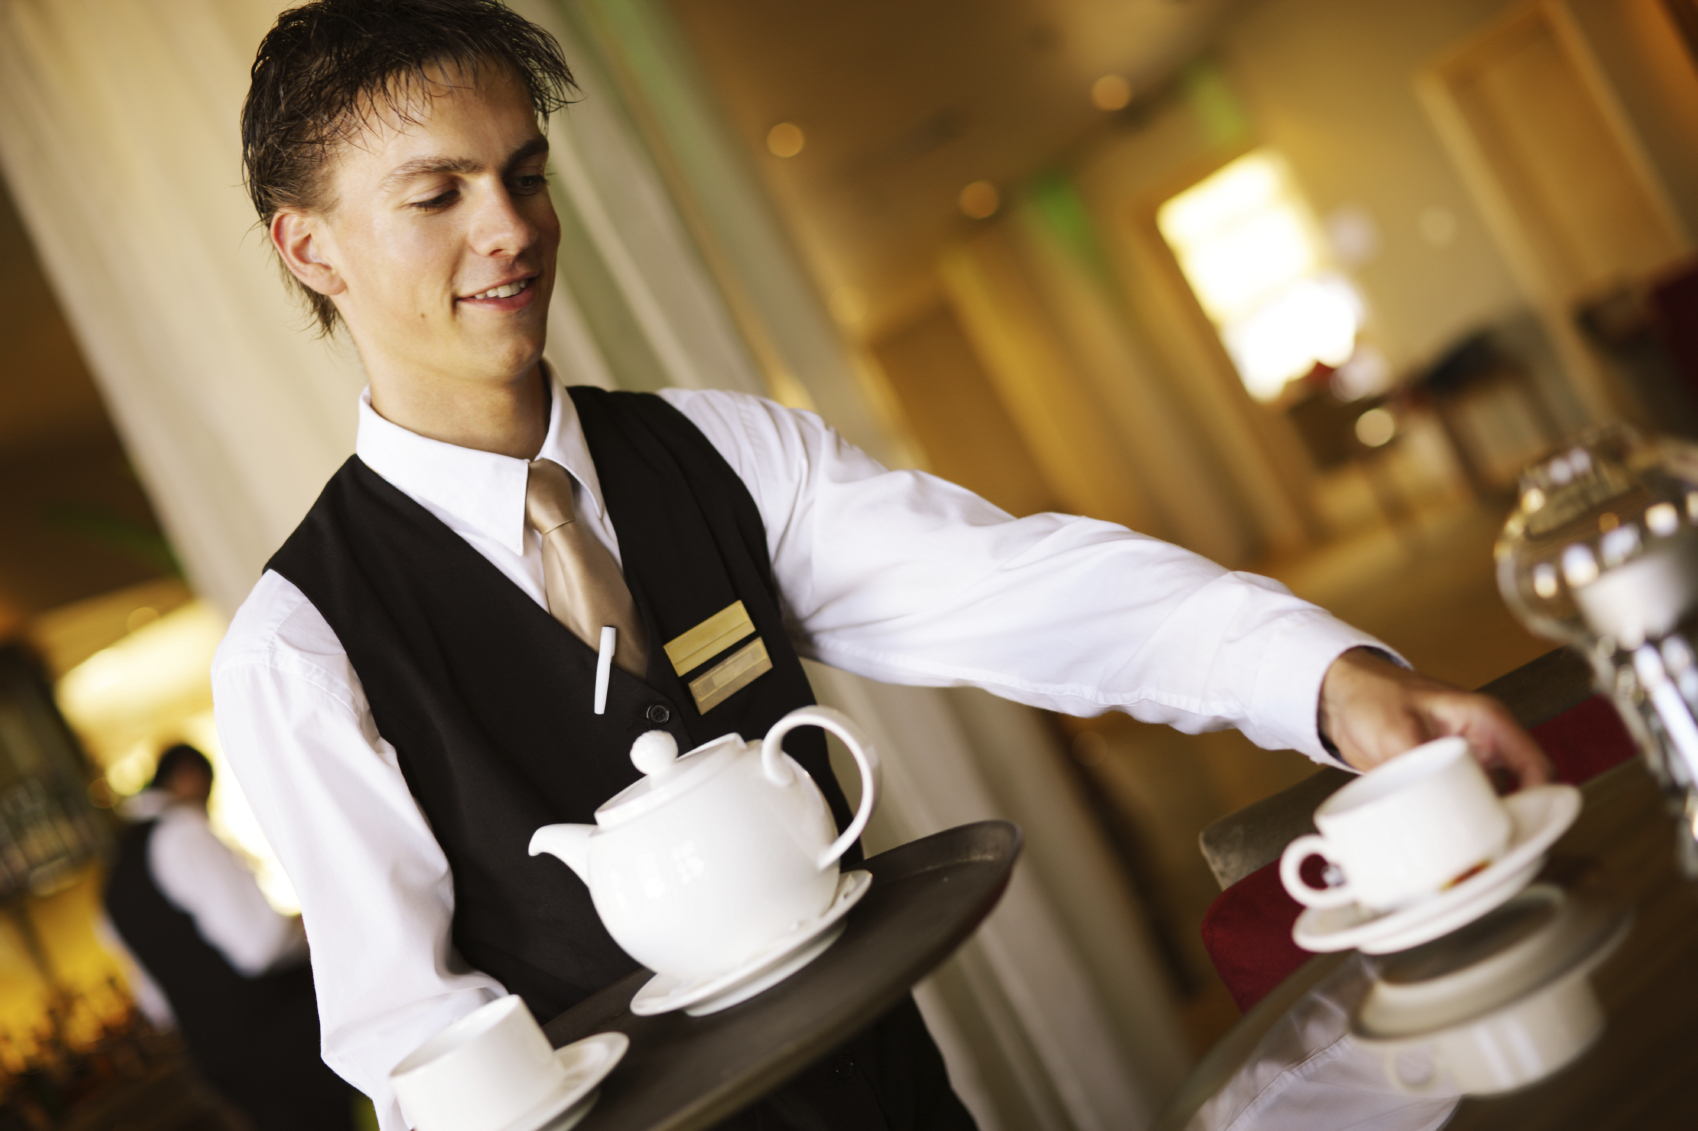 Hotel waiter